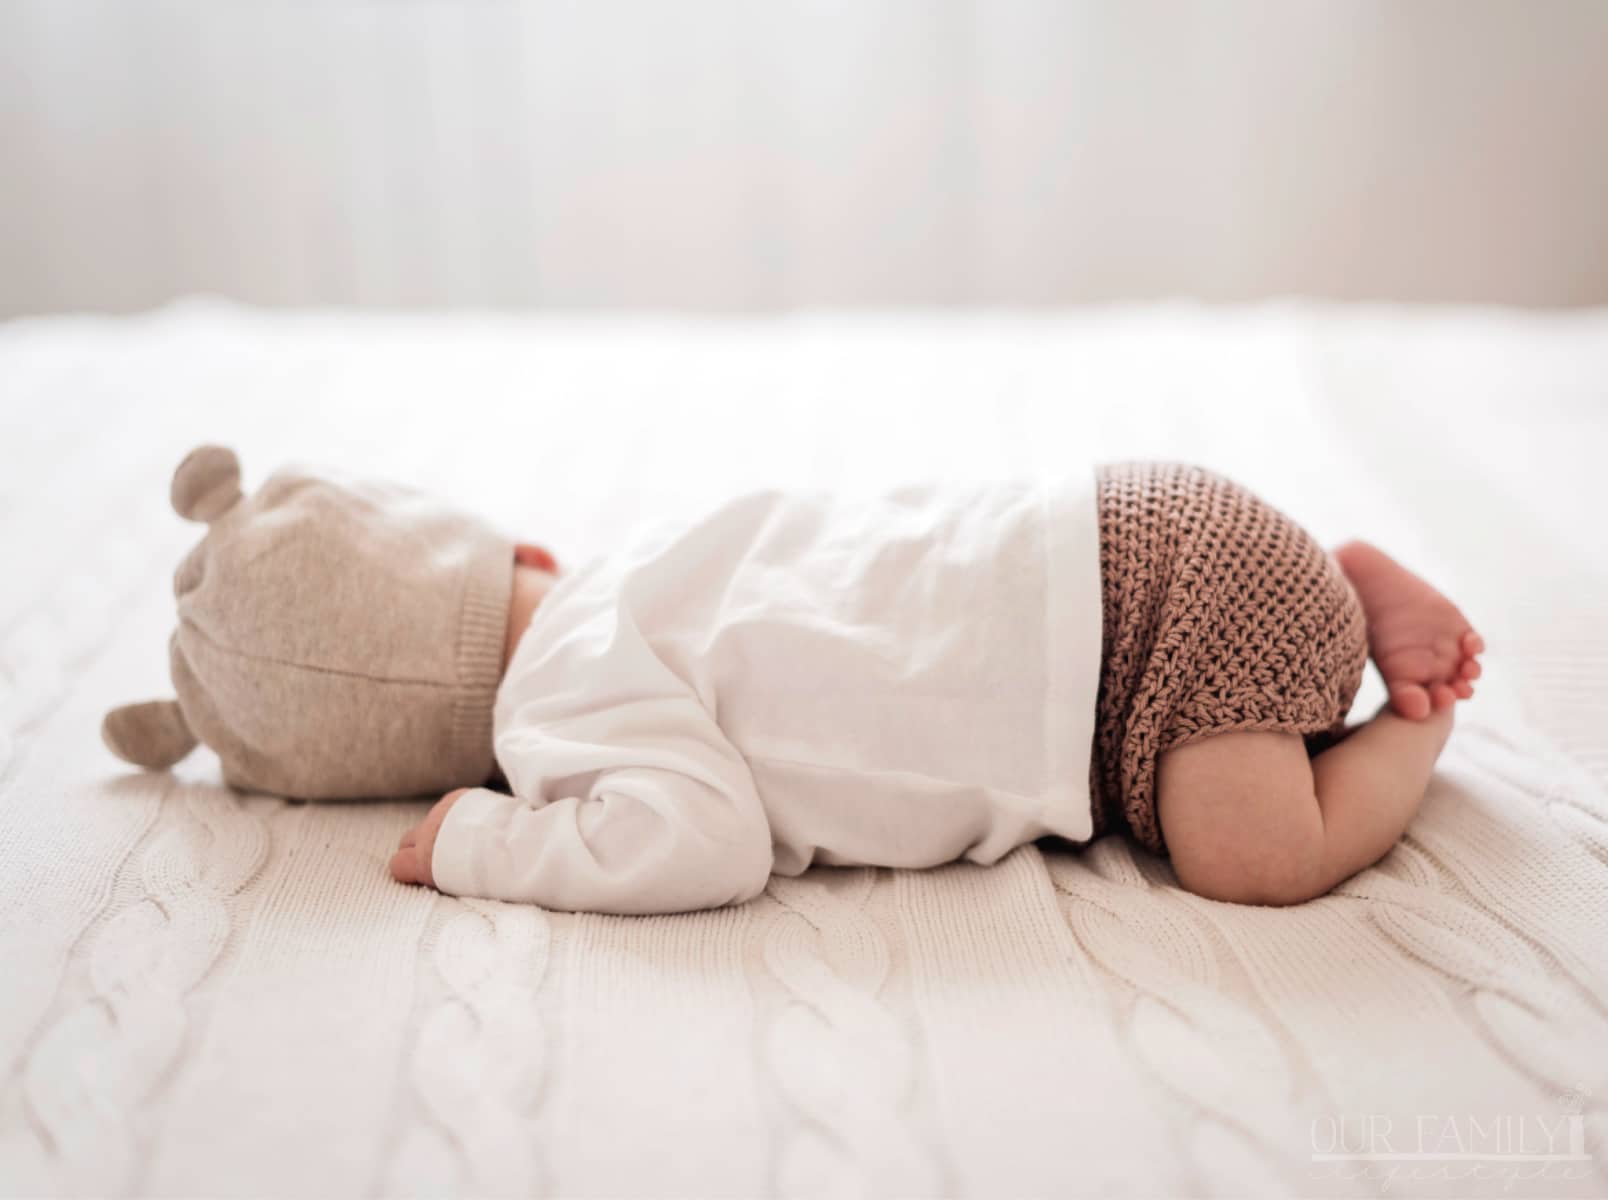 newborn-child-sleeping